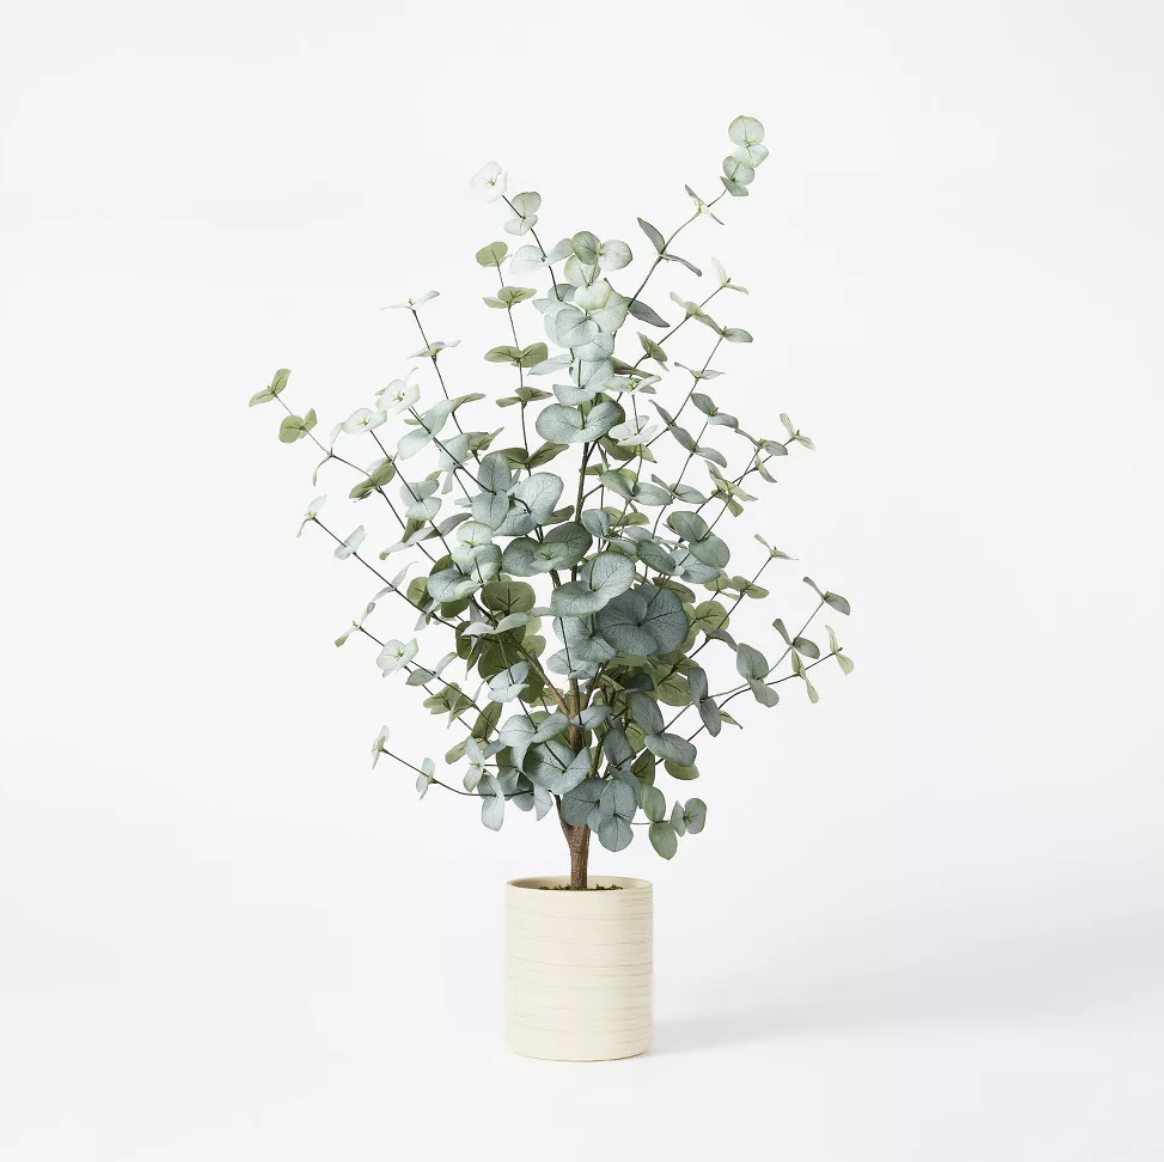 Target - $45 - Large Artificial Eucalyptus Leaf in Pot